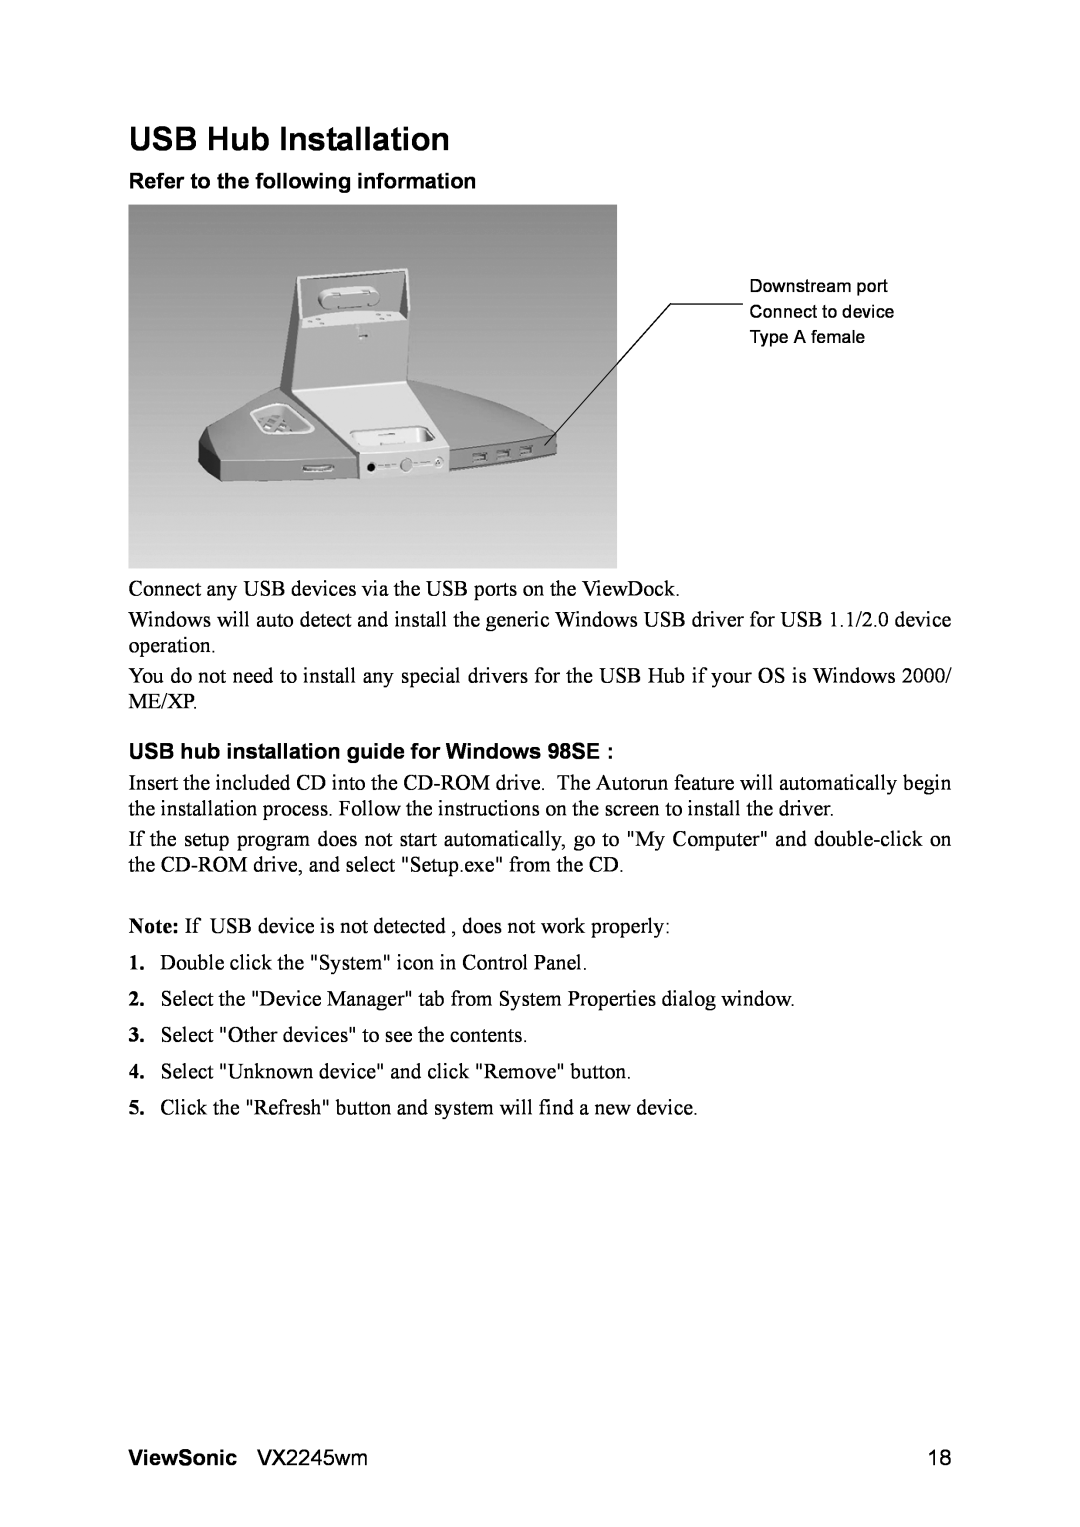 ViewSonic VS11349 USB Hub Installation, USB hub installation guide for Windows 98SE, Refer to the following information 